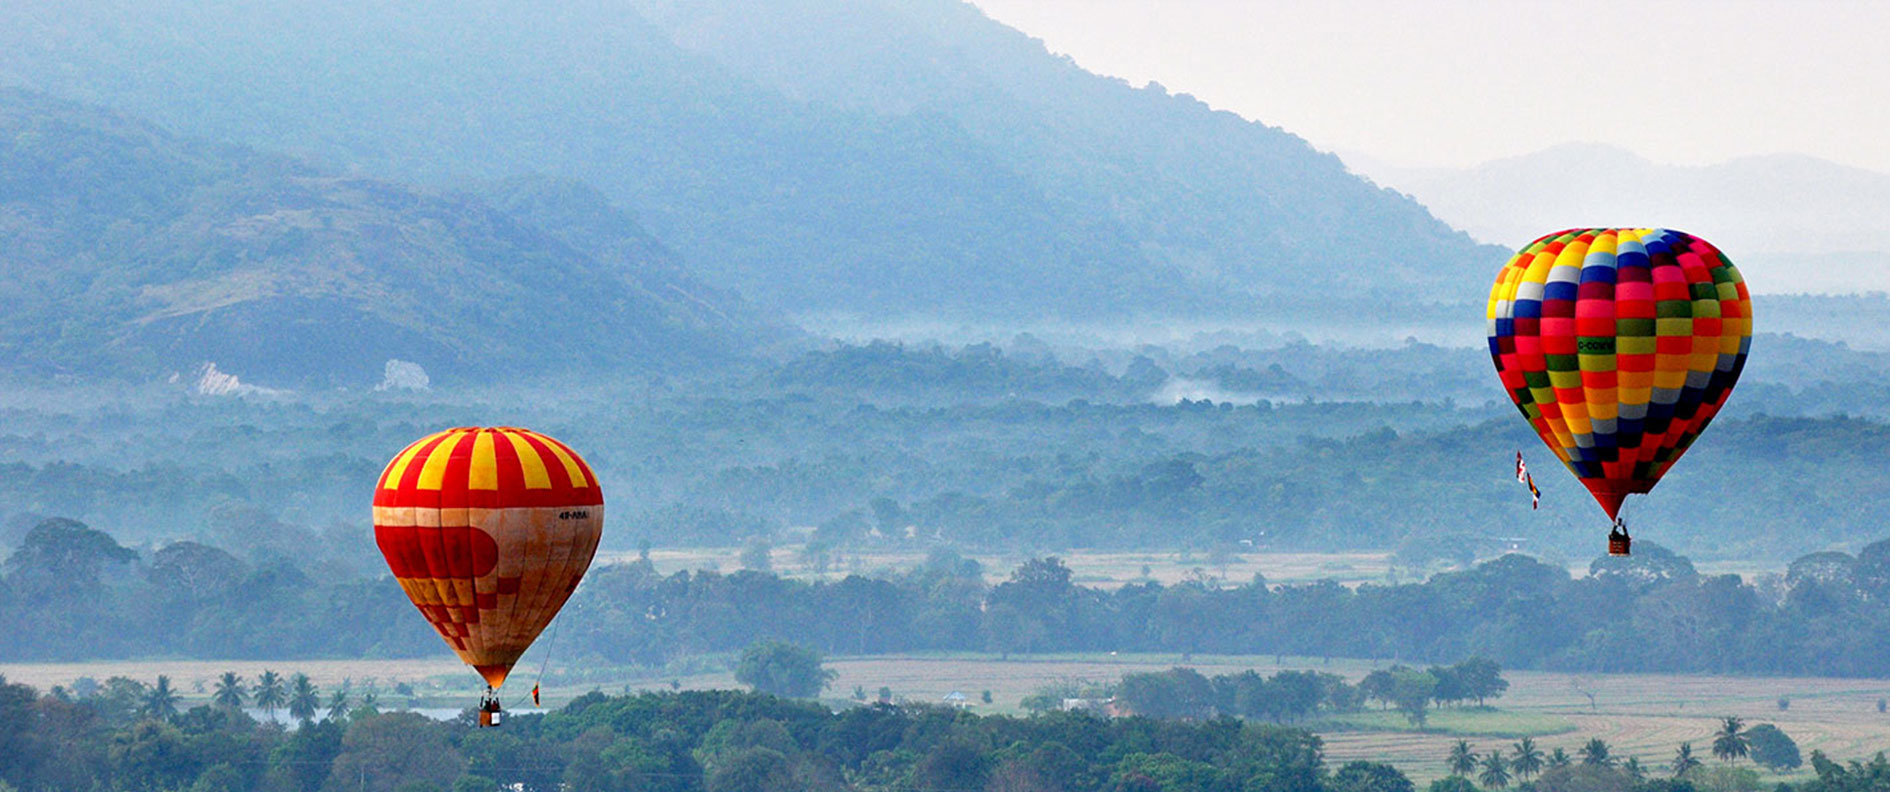 Hot air ballooning | Soultrek Sri Lanka